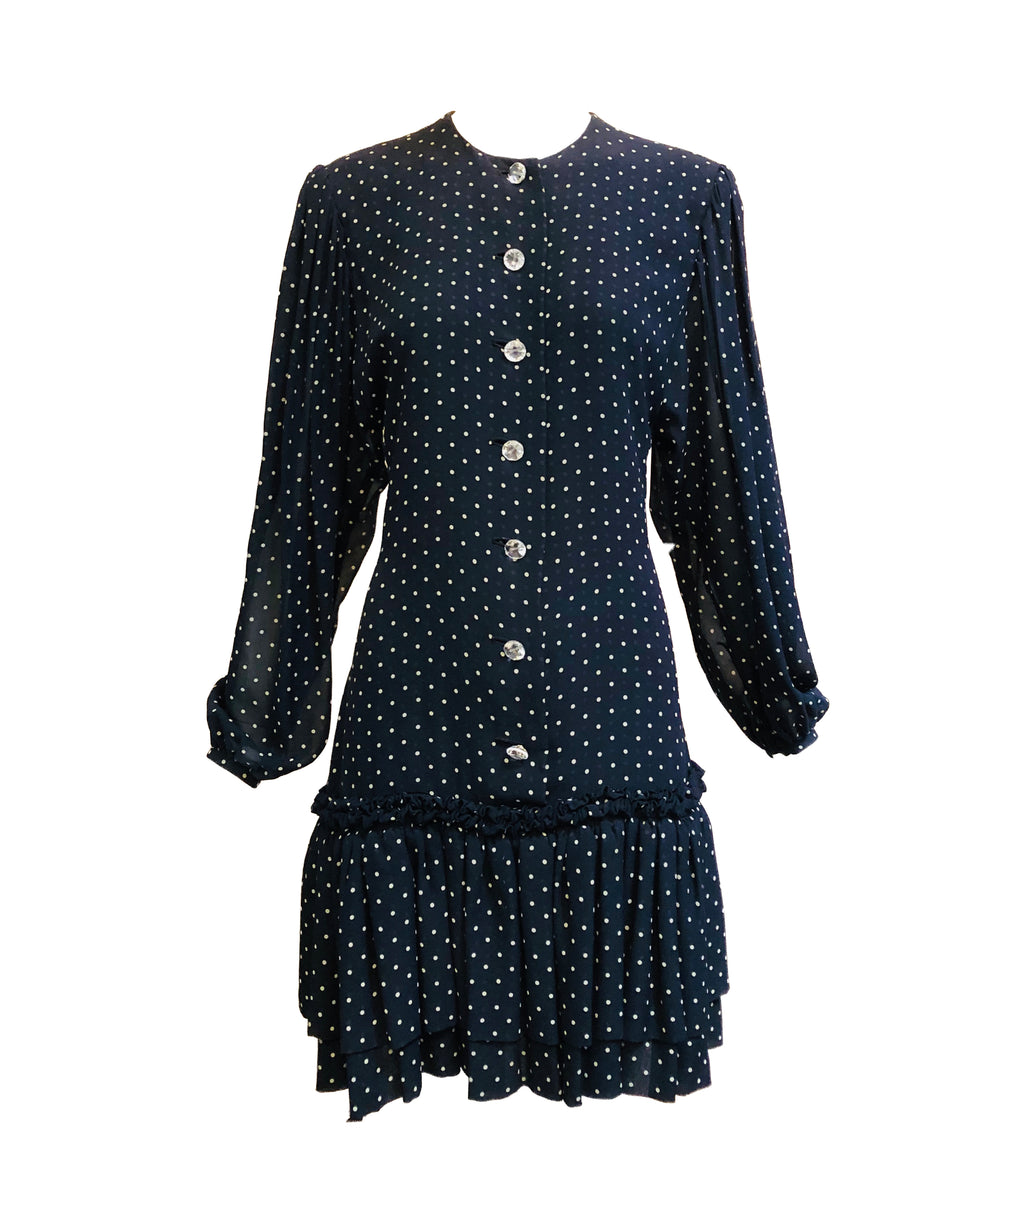 Galanos Attribution Dress Blue Silk Polka Dot Mini FRONT 1 of 4